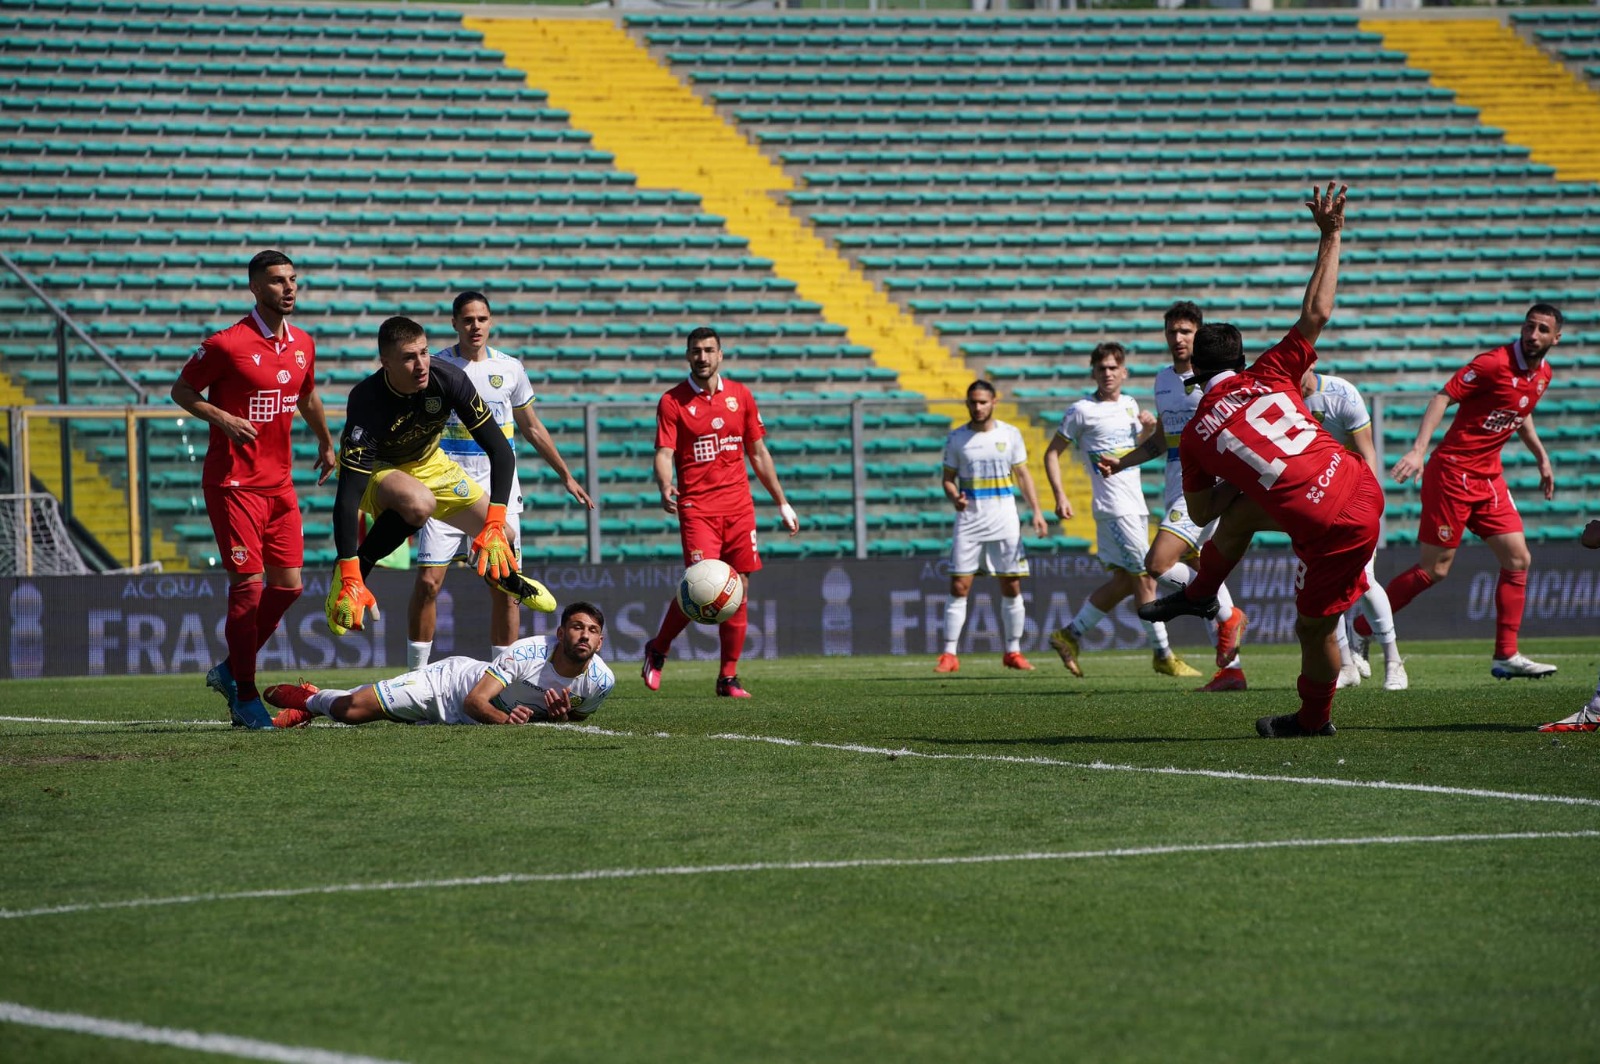 Ancona-Carrarese 3-3: Paolucci salva i dorici dopo la rimonta apuana